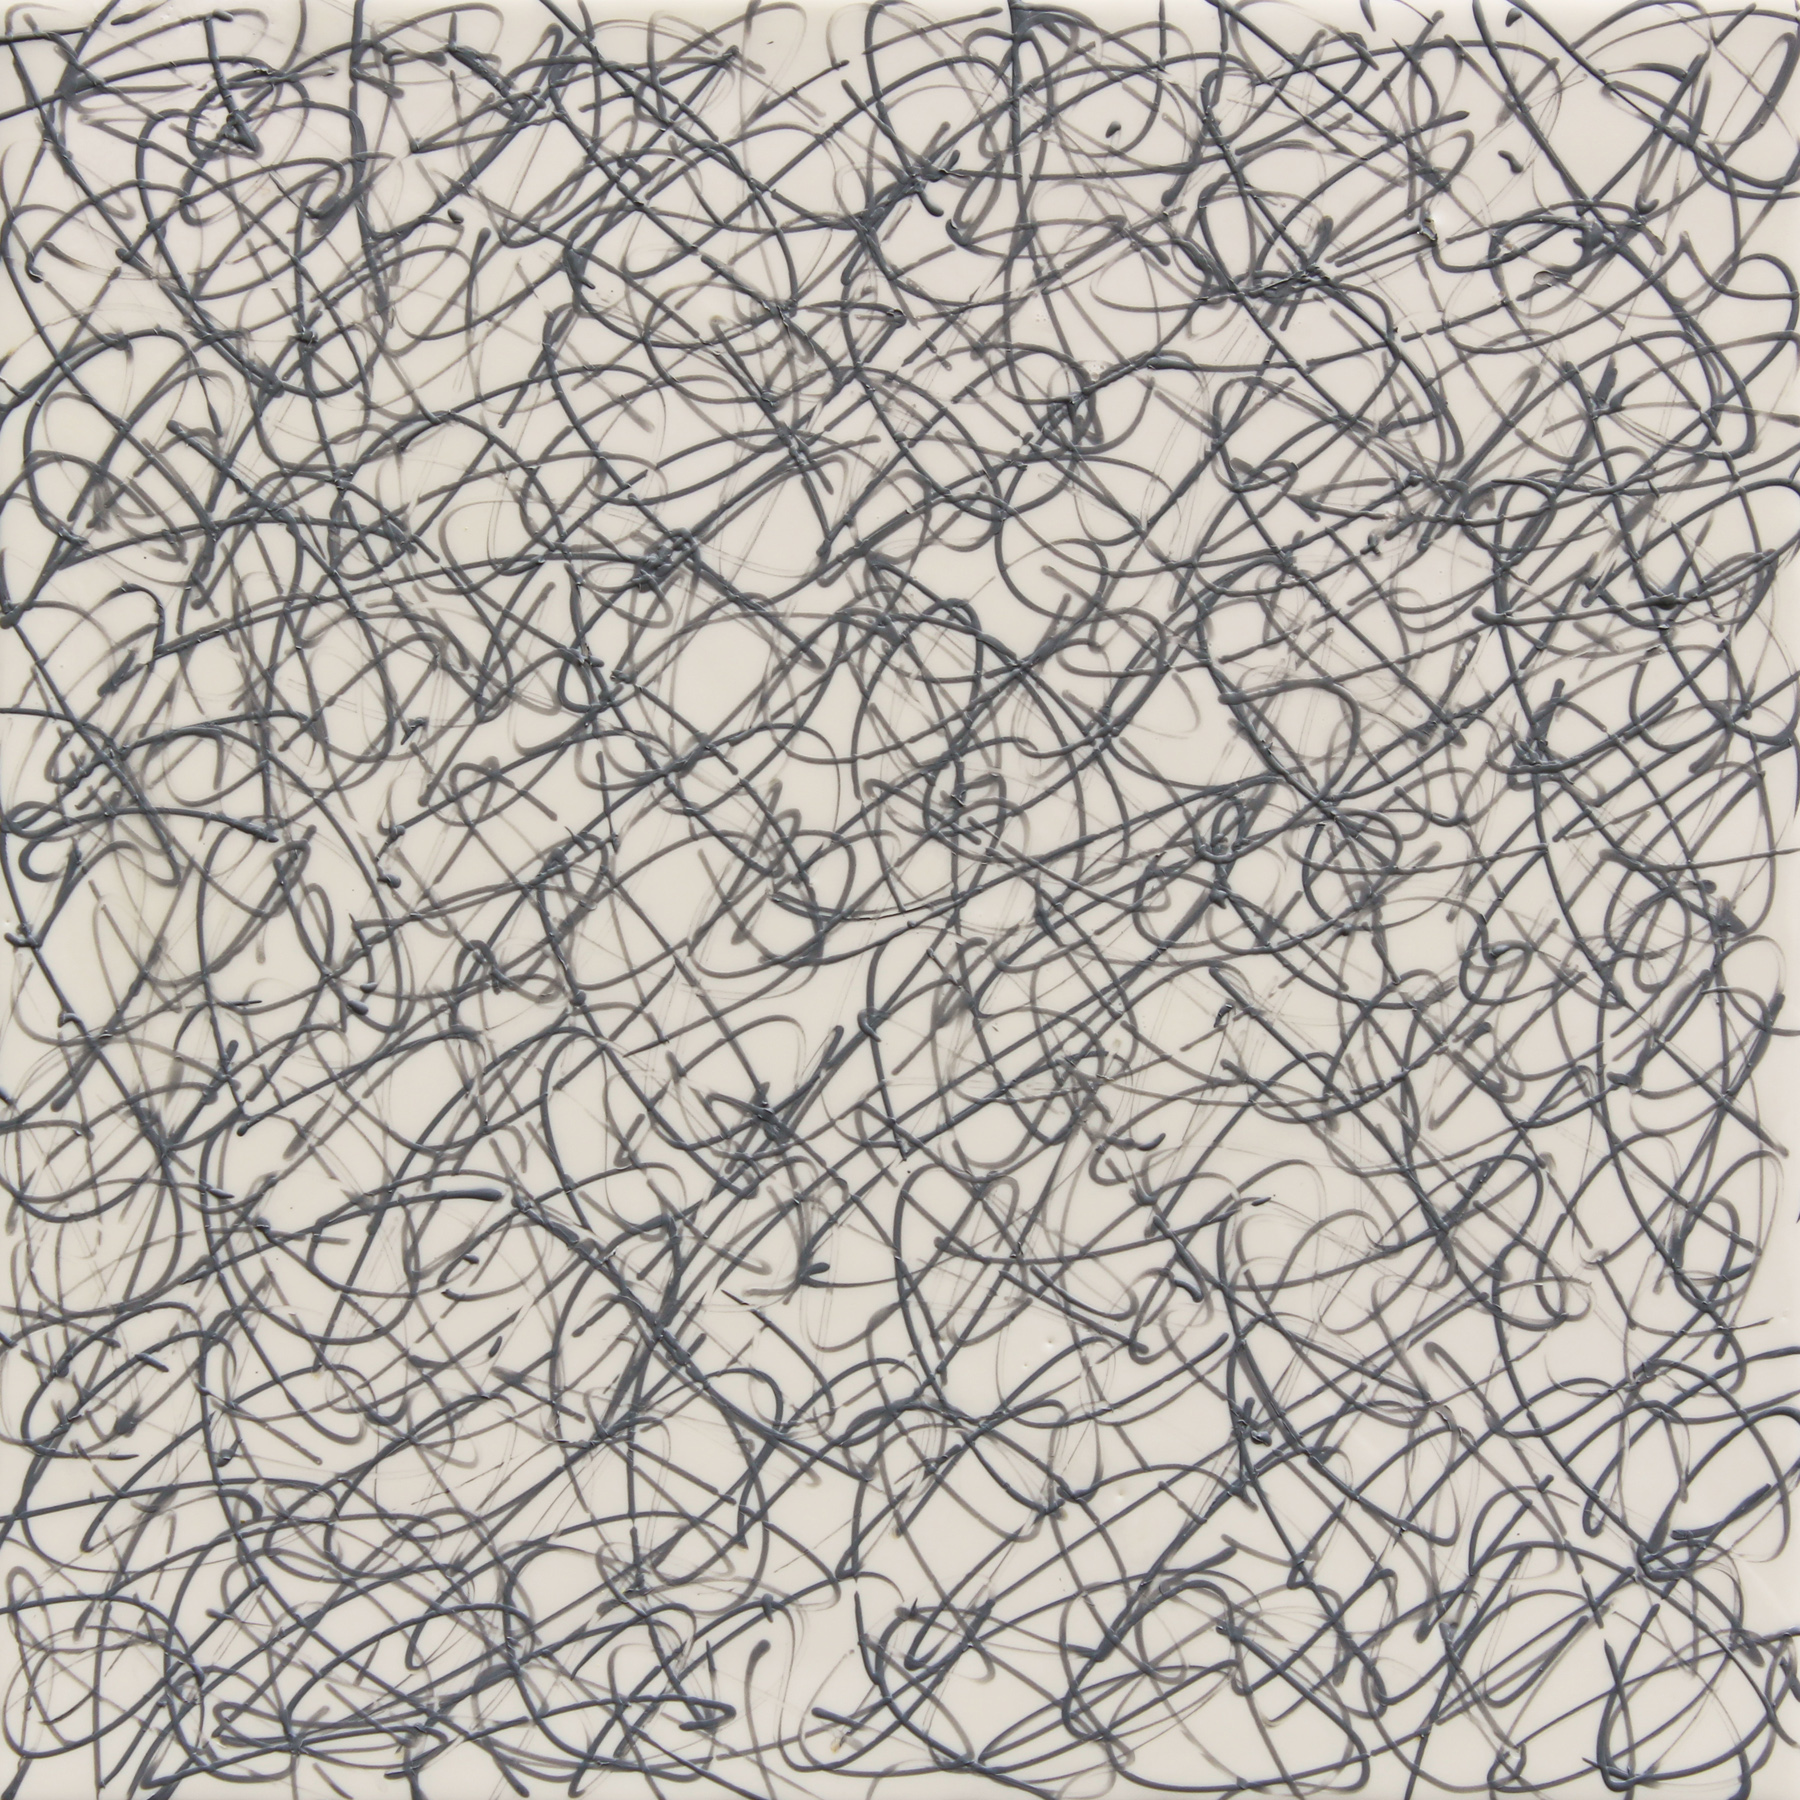  Patricia Dusman,  Only Words (Medium Grey on White,)  Encaustic on panel, 24x24 